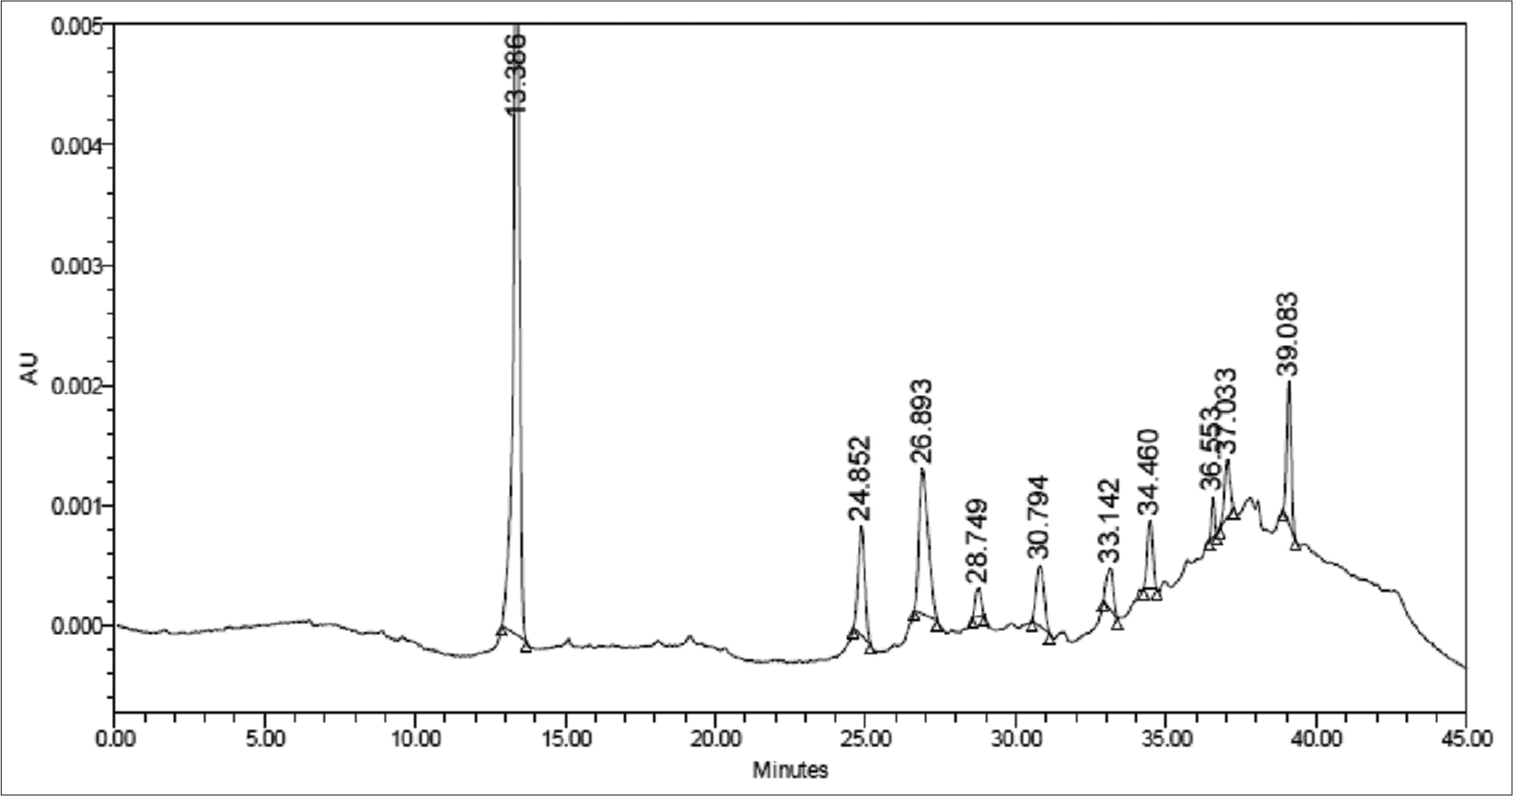 High-performance liquid chromatography fingerprint of VG111. AU: Absorbance units.